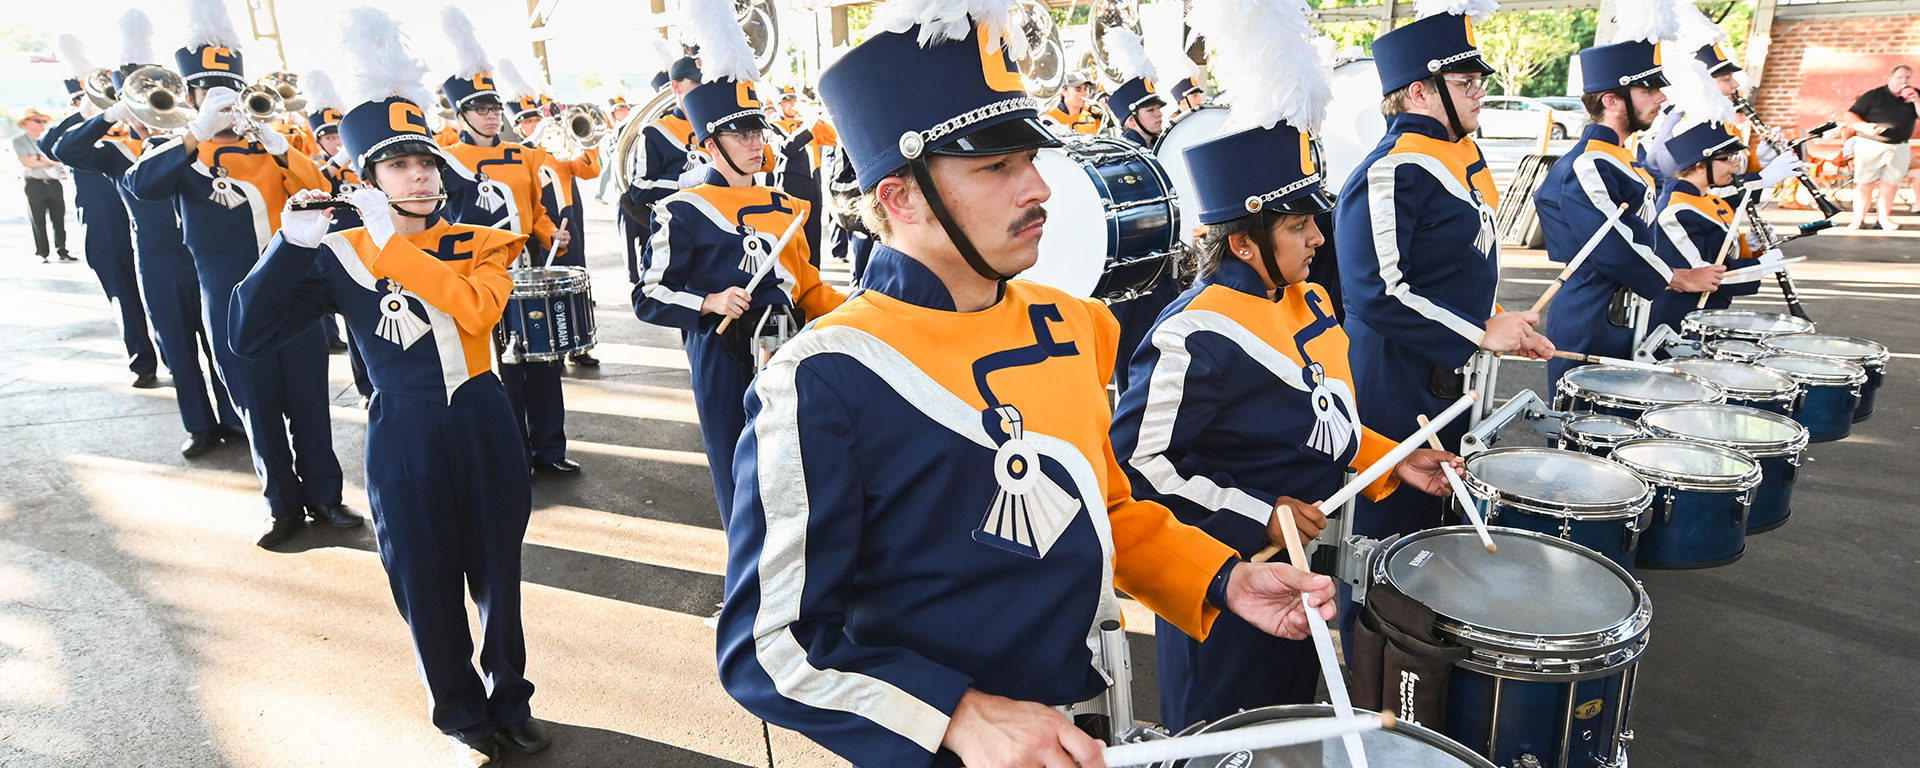 UTC marching band